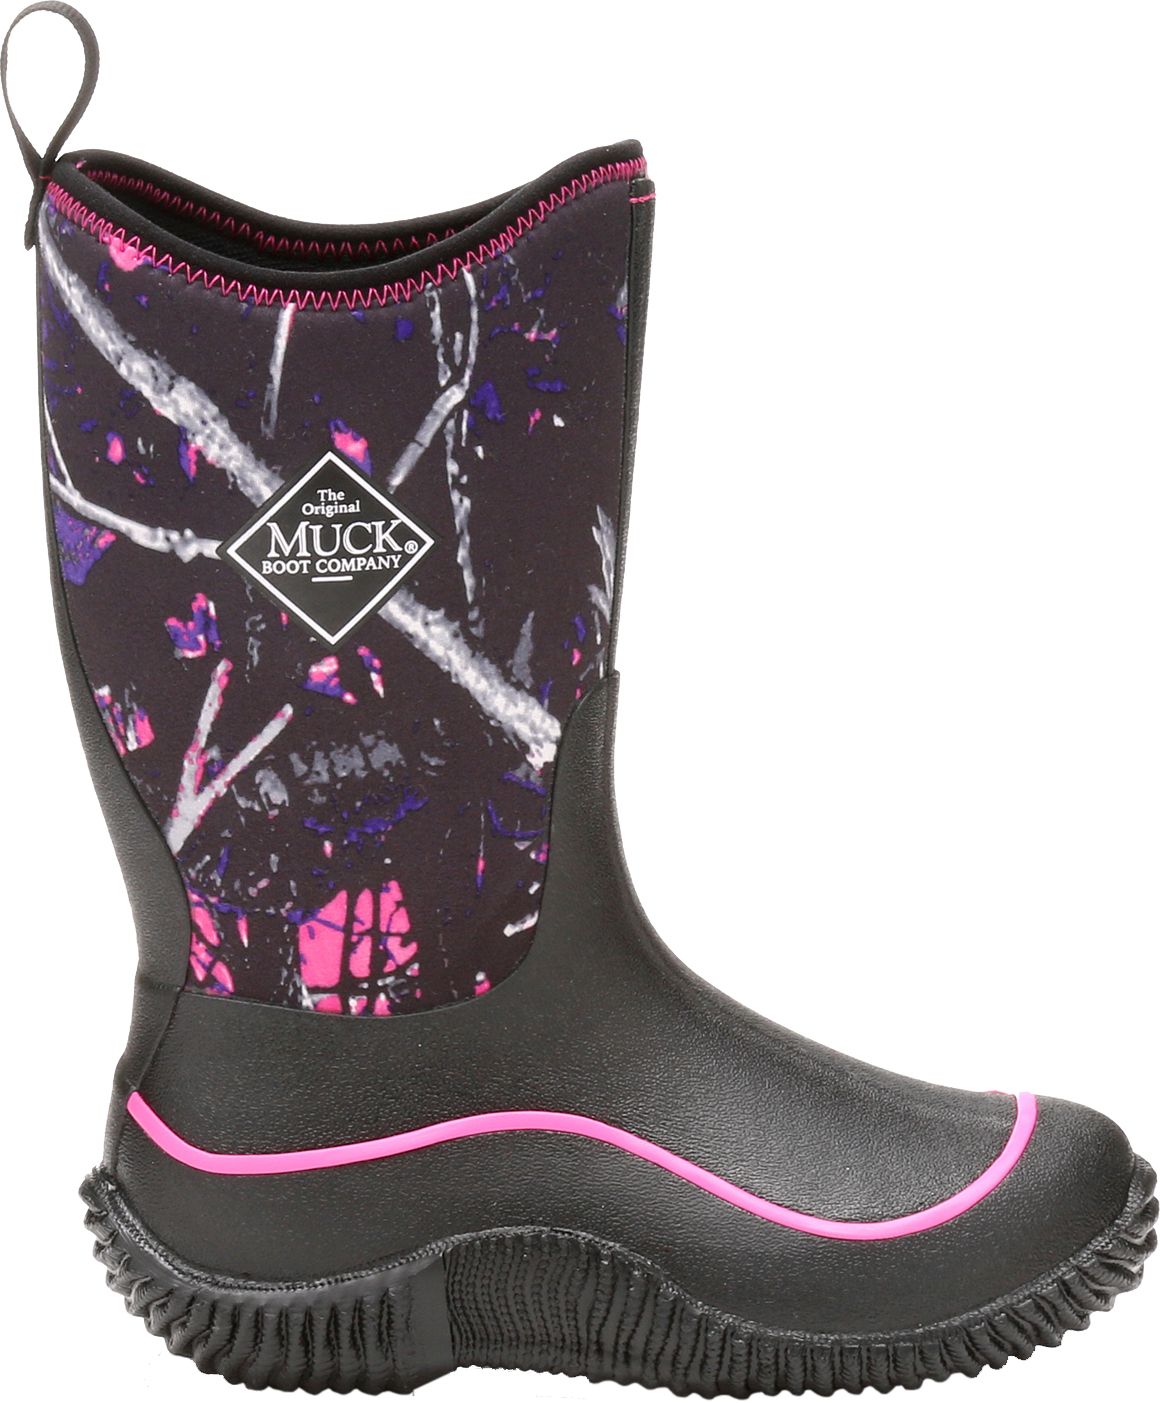 HISEA Kids Rain Boots Waterproof Muck Mud Boots for Boys Girls Toddlers